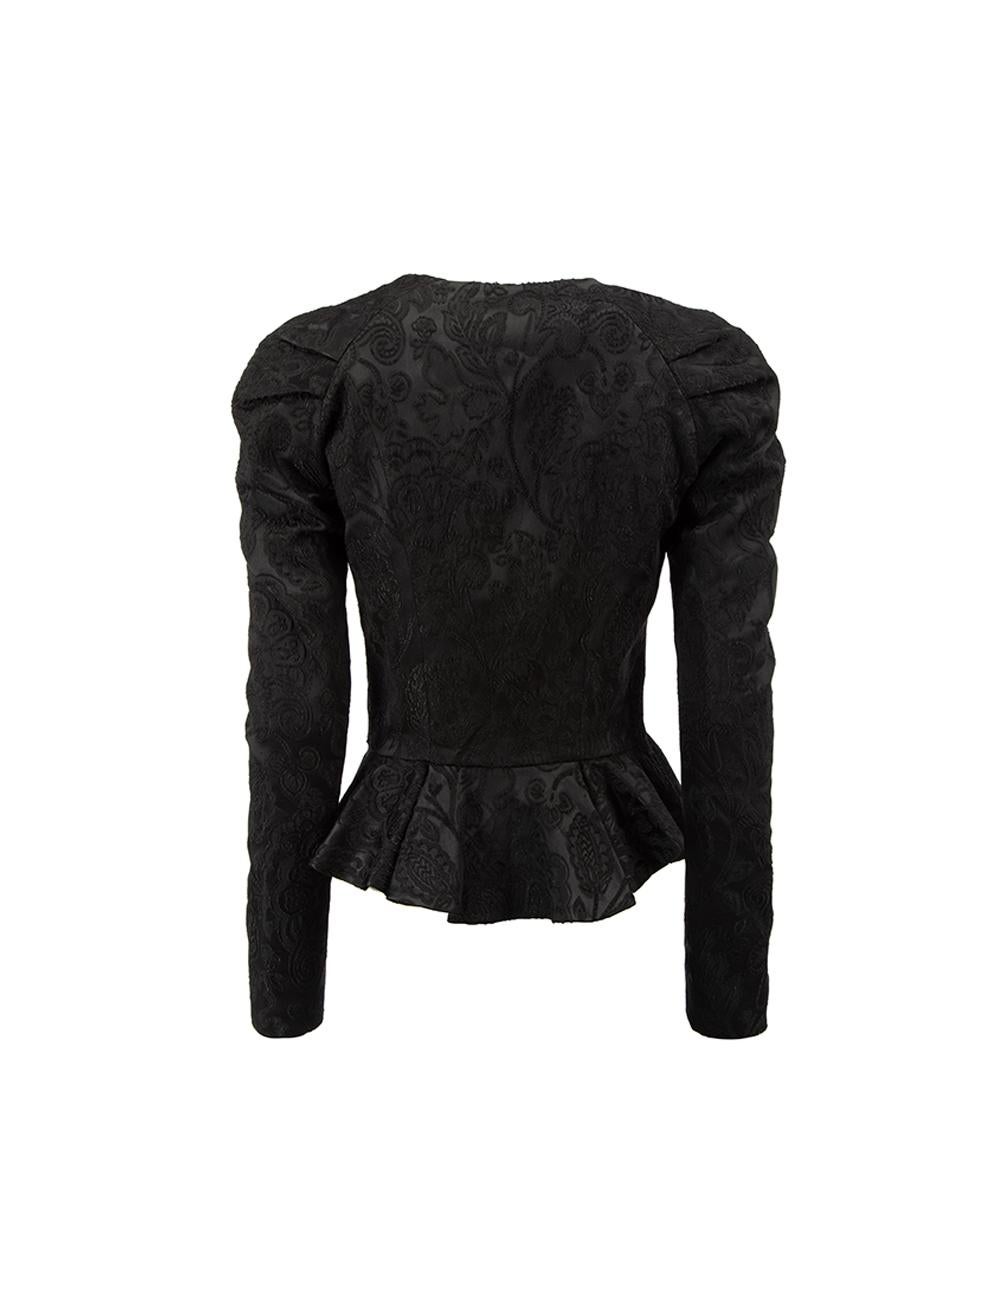 Temperley London Women's Black Jacquard Peplum Jacket 1